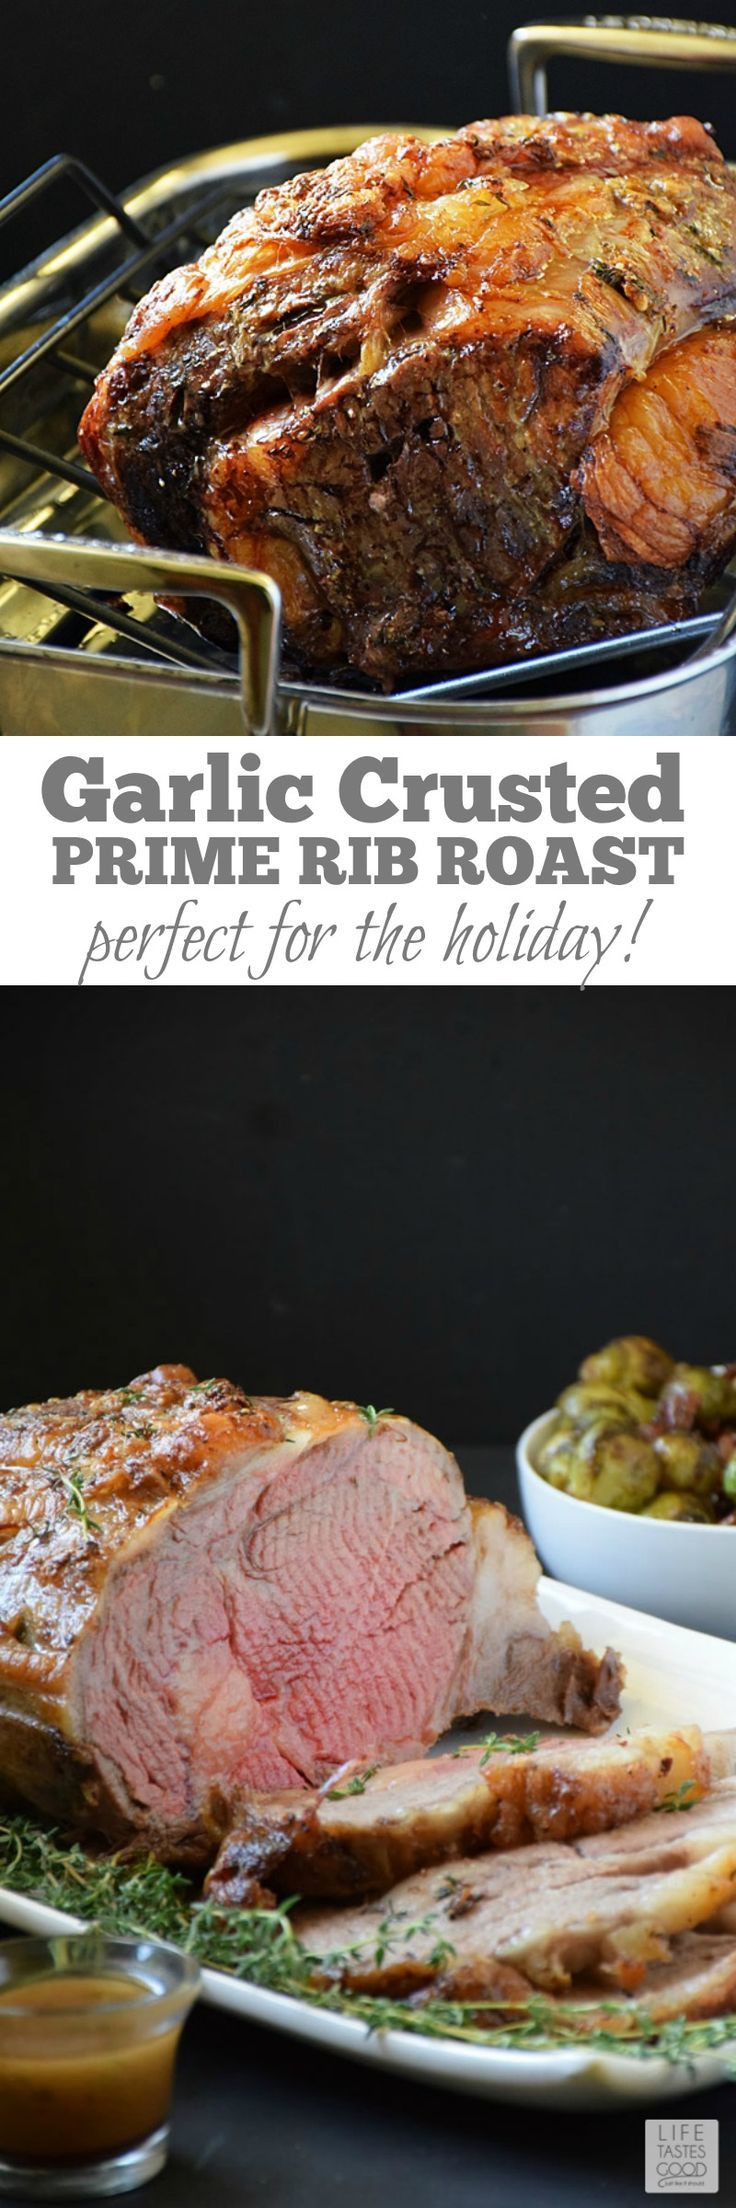 Prime Rib Christmas Dinner Menu Ideas
 Garlic Crusted Prime Rib Roast